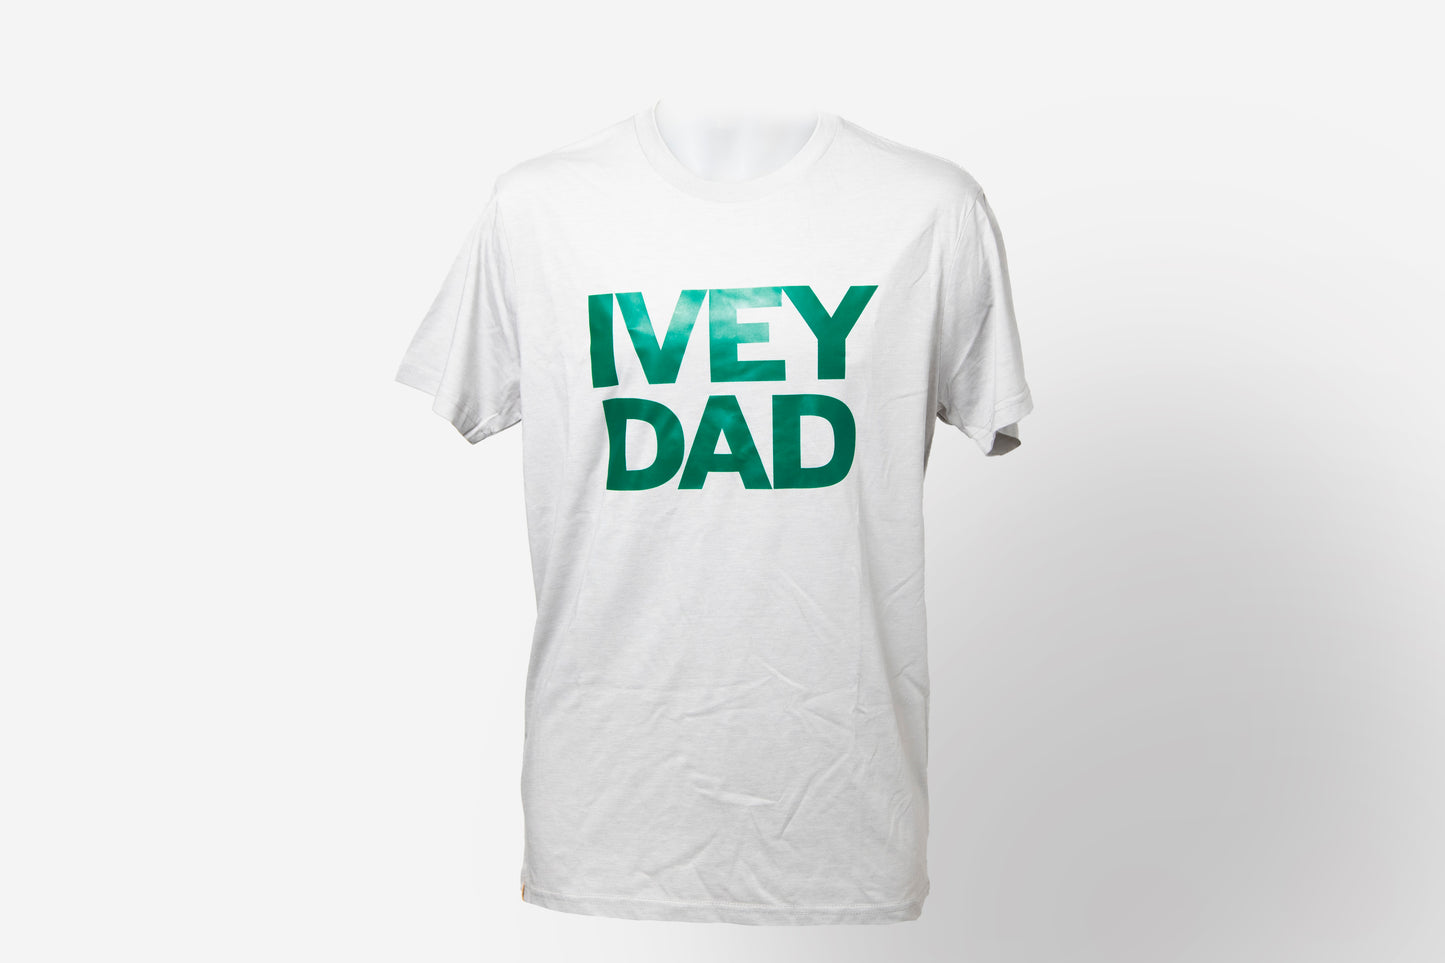 Ivey Dad Tentree T-shirt